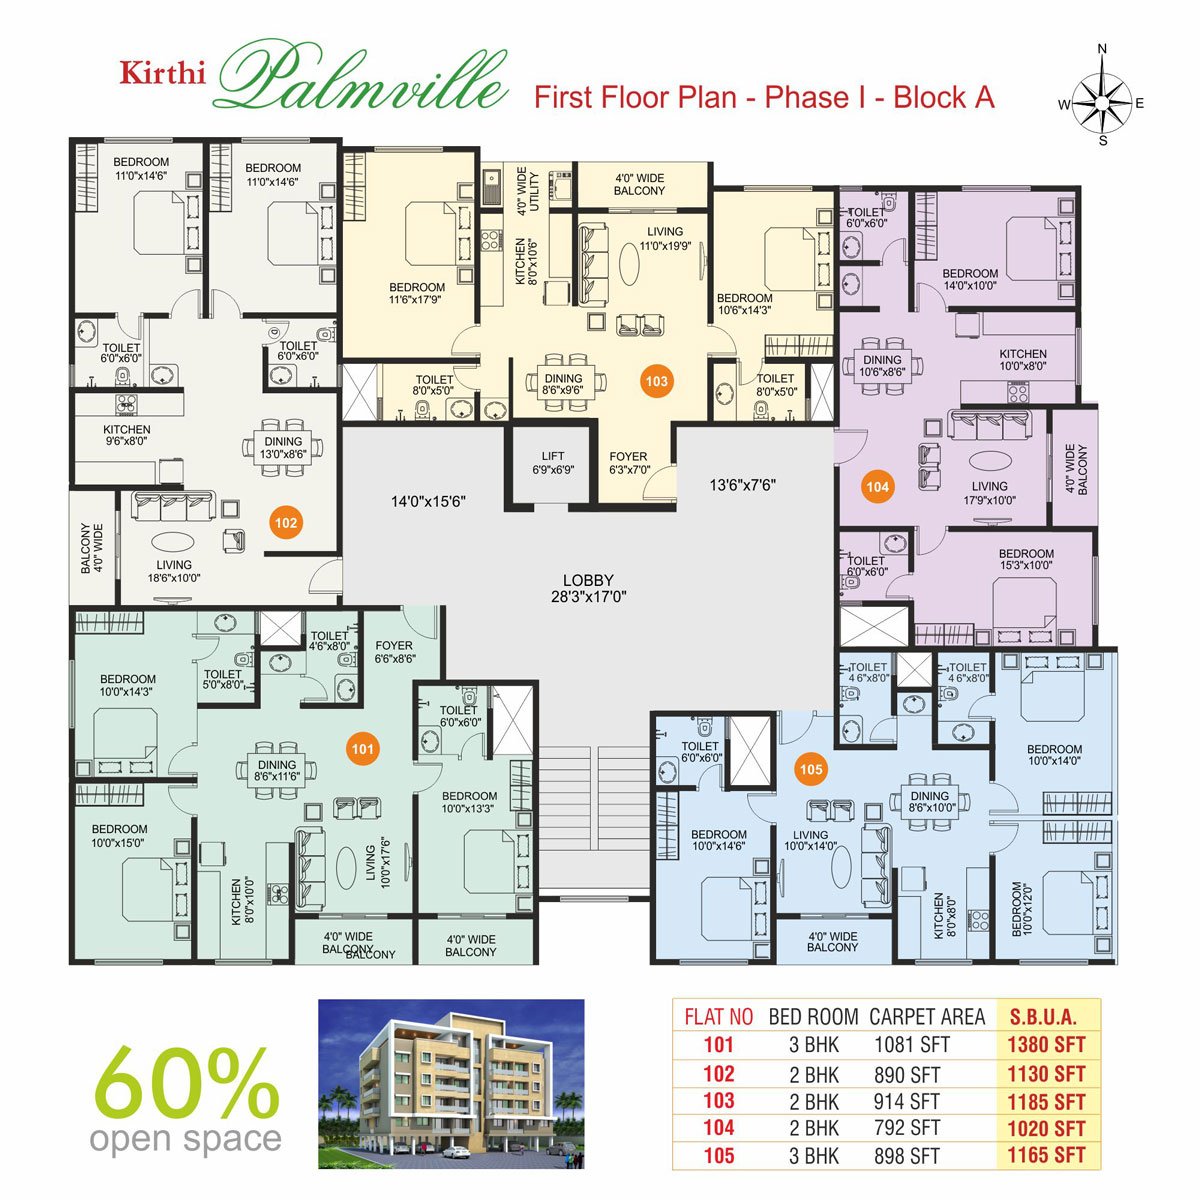 Kirthi Palmville First Floor Plan